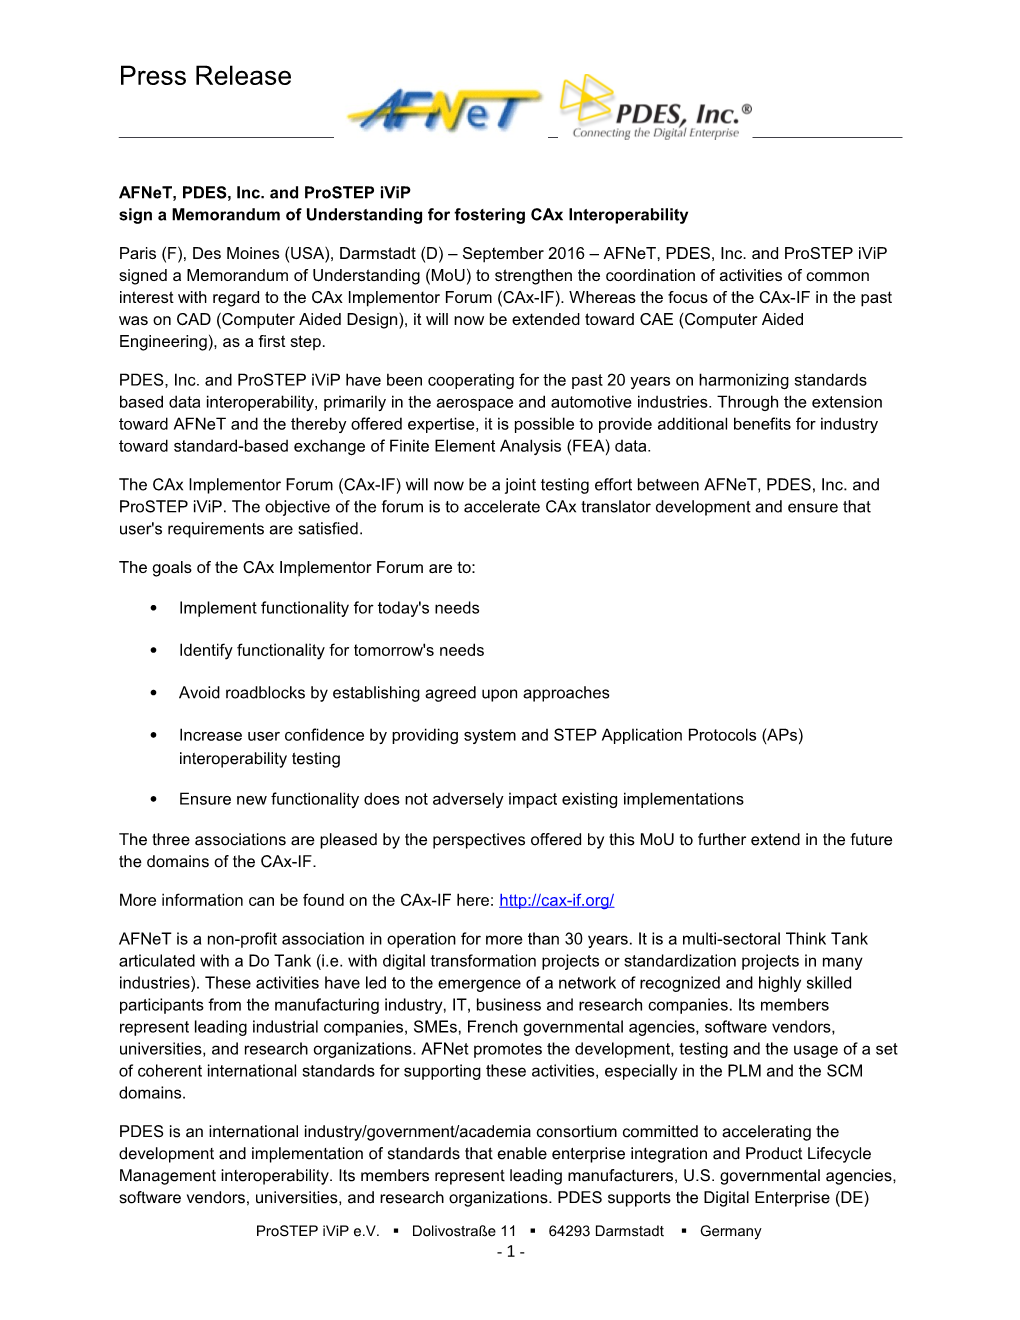 Afnet, PDES, Inc. and Prostep Ivip Sign a Memorandum of Understanding for Fostering Cax